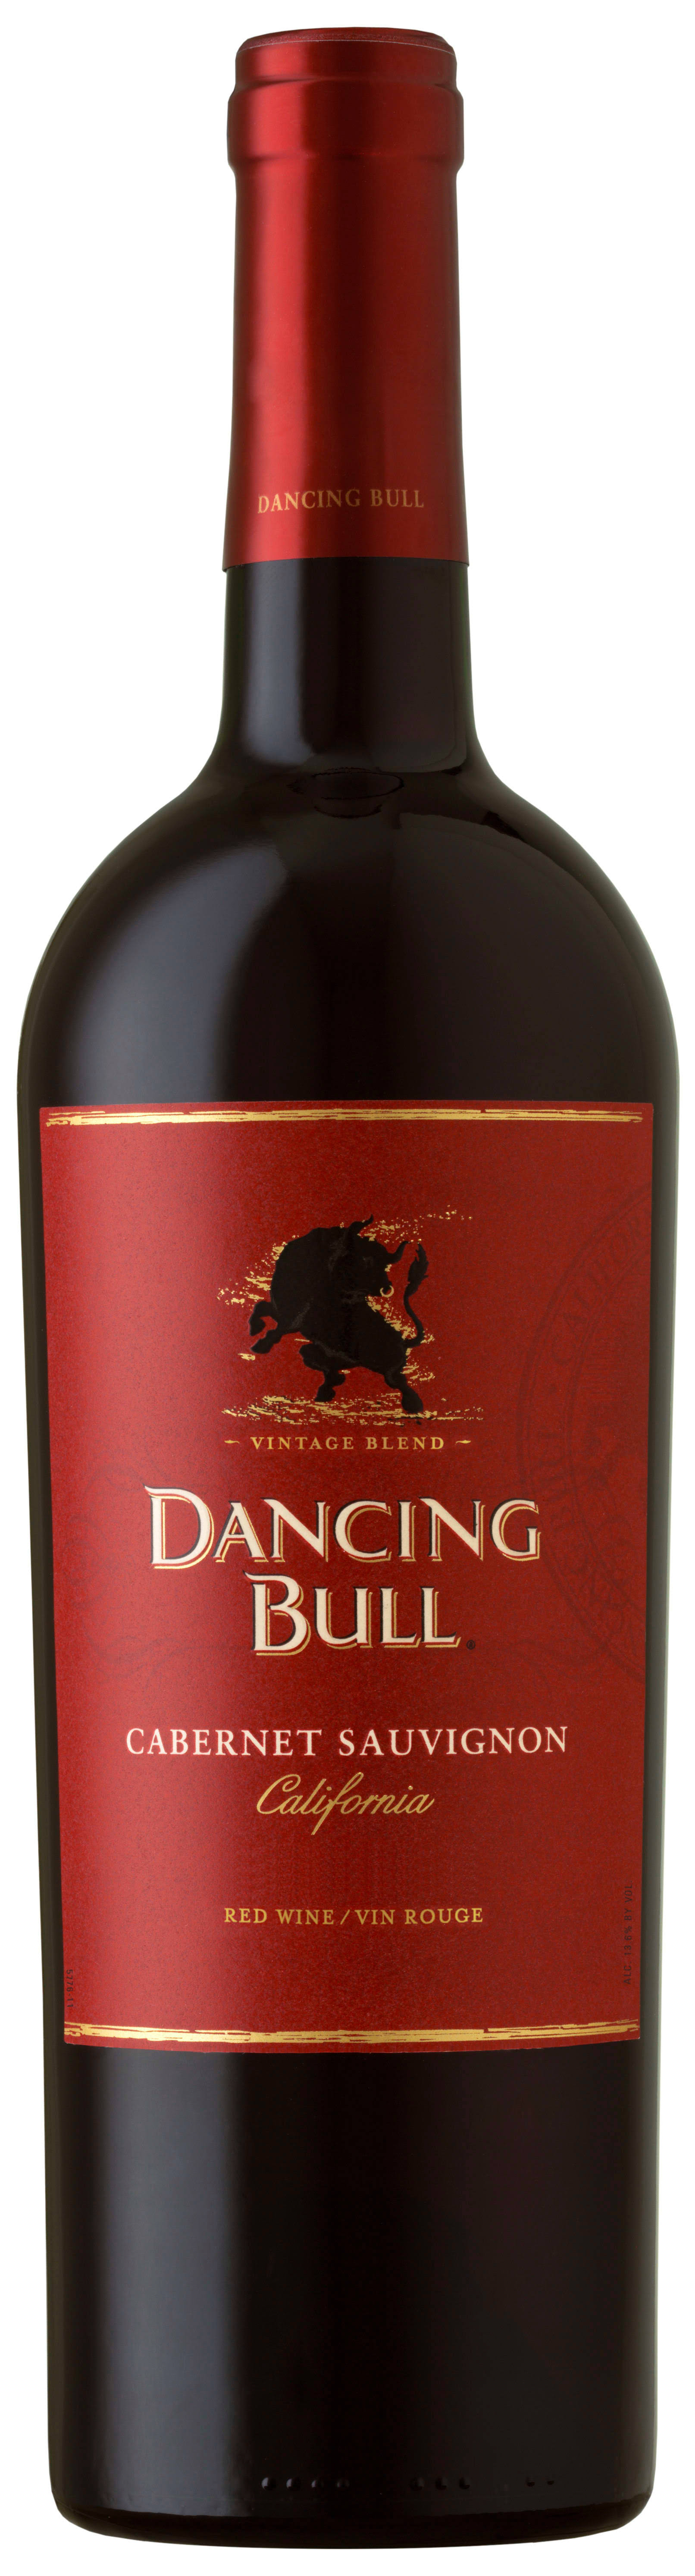 Dancing Bull Cabernet Sauvignon, California, 2015 - 750 ml